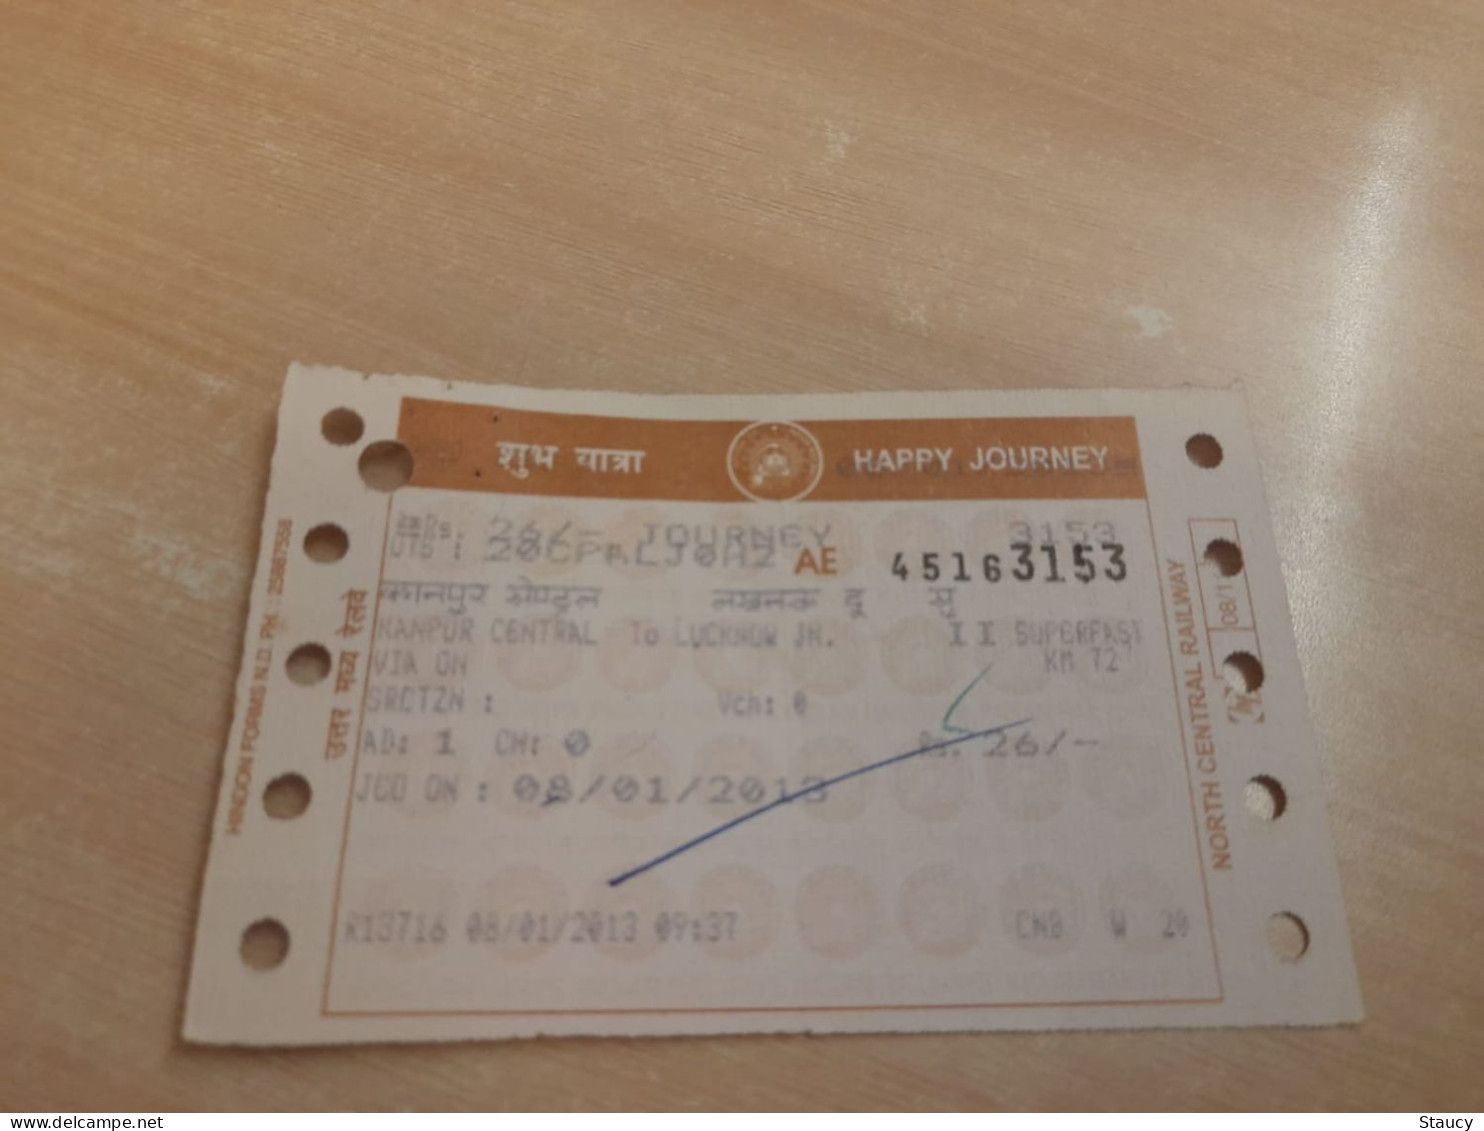 India Old / Vintage - Indian Railway / Train Ticket As Per Scan - Monde